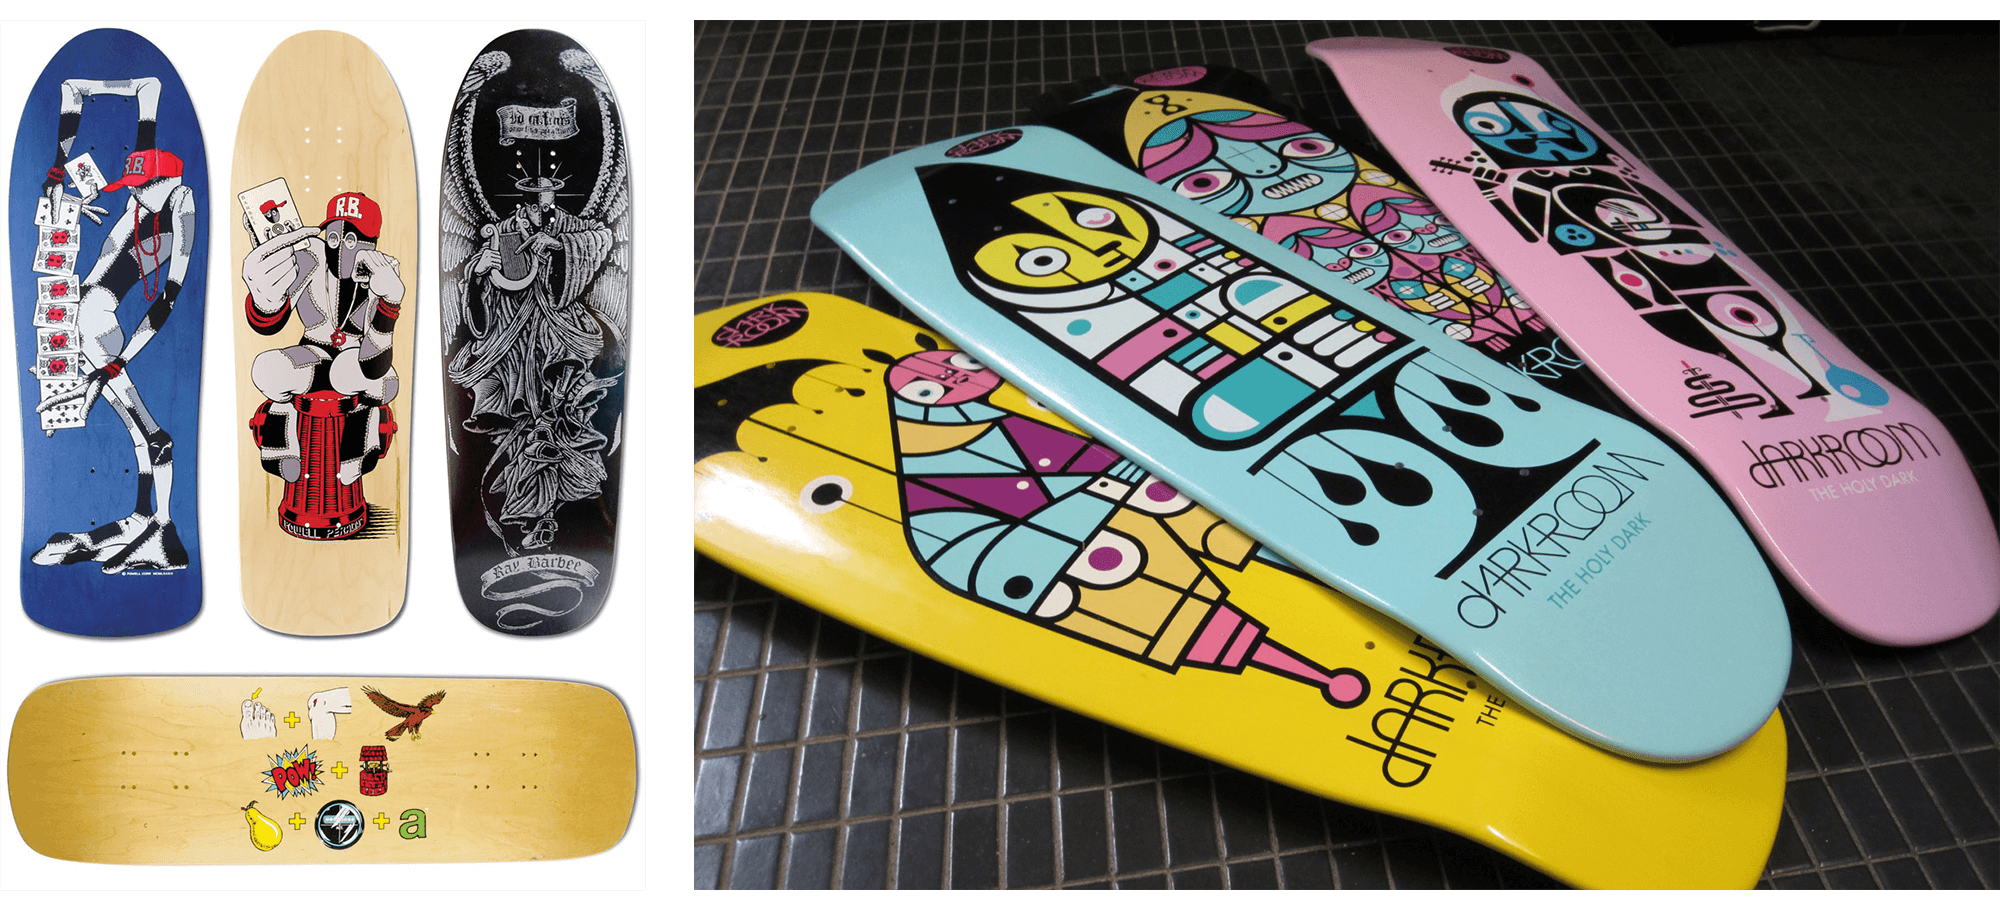 Skateboards with Sean Cliver skateboard artwork and skateboards with Don Pendleton artwork